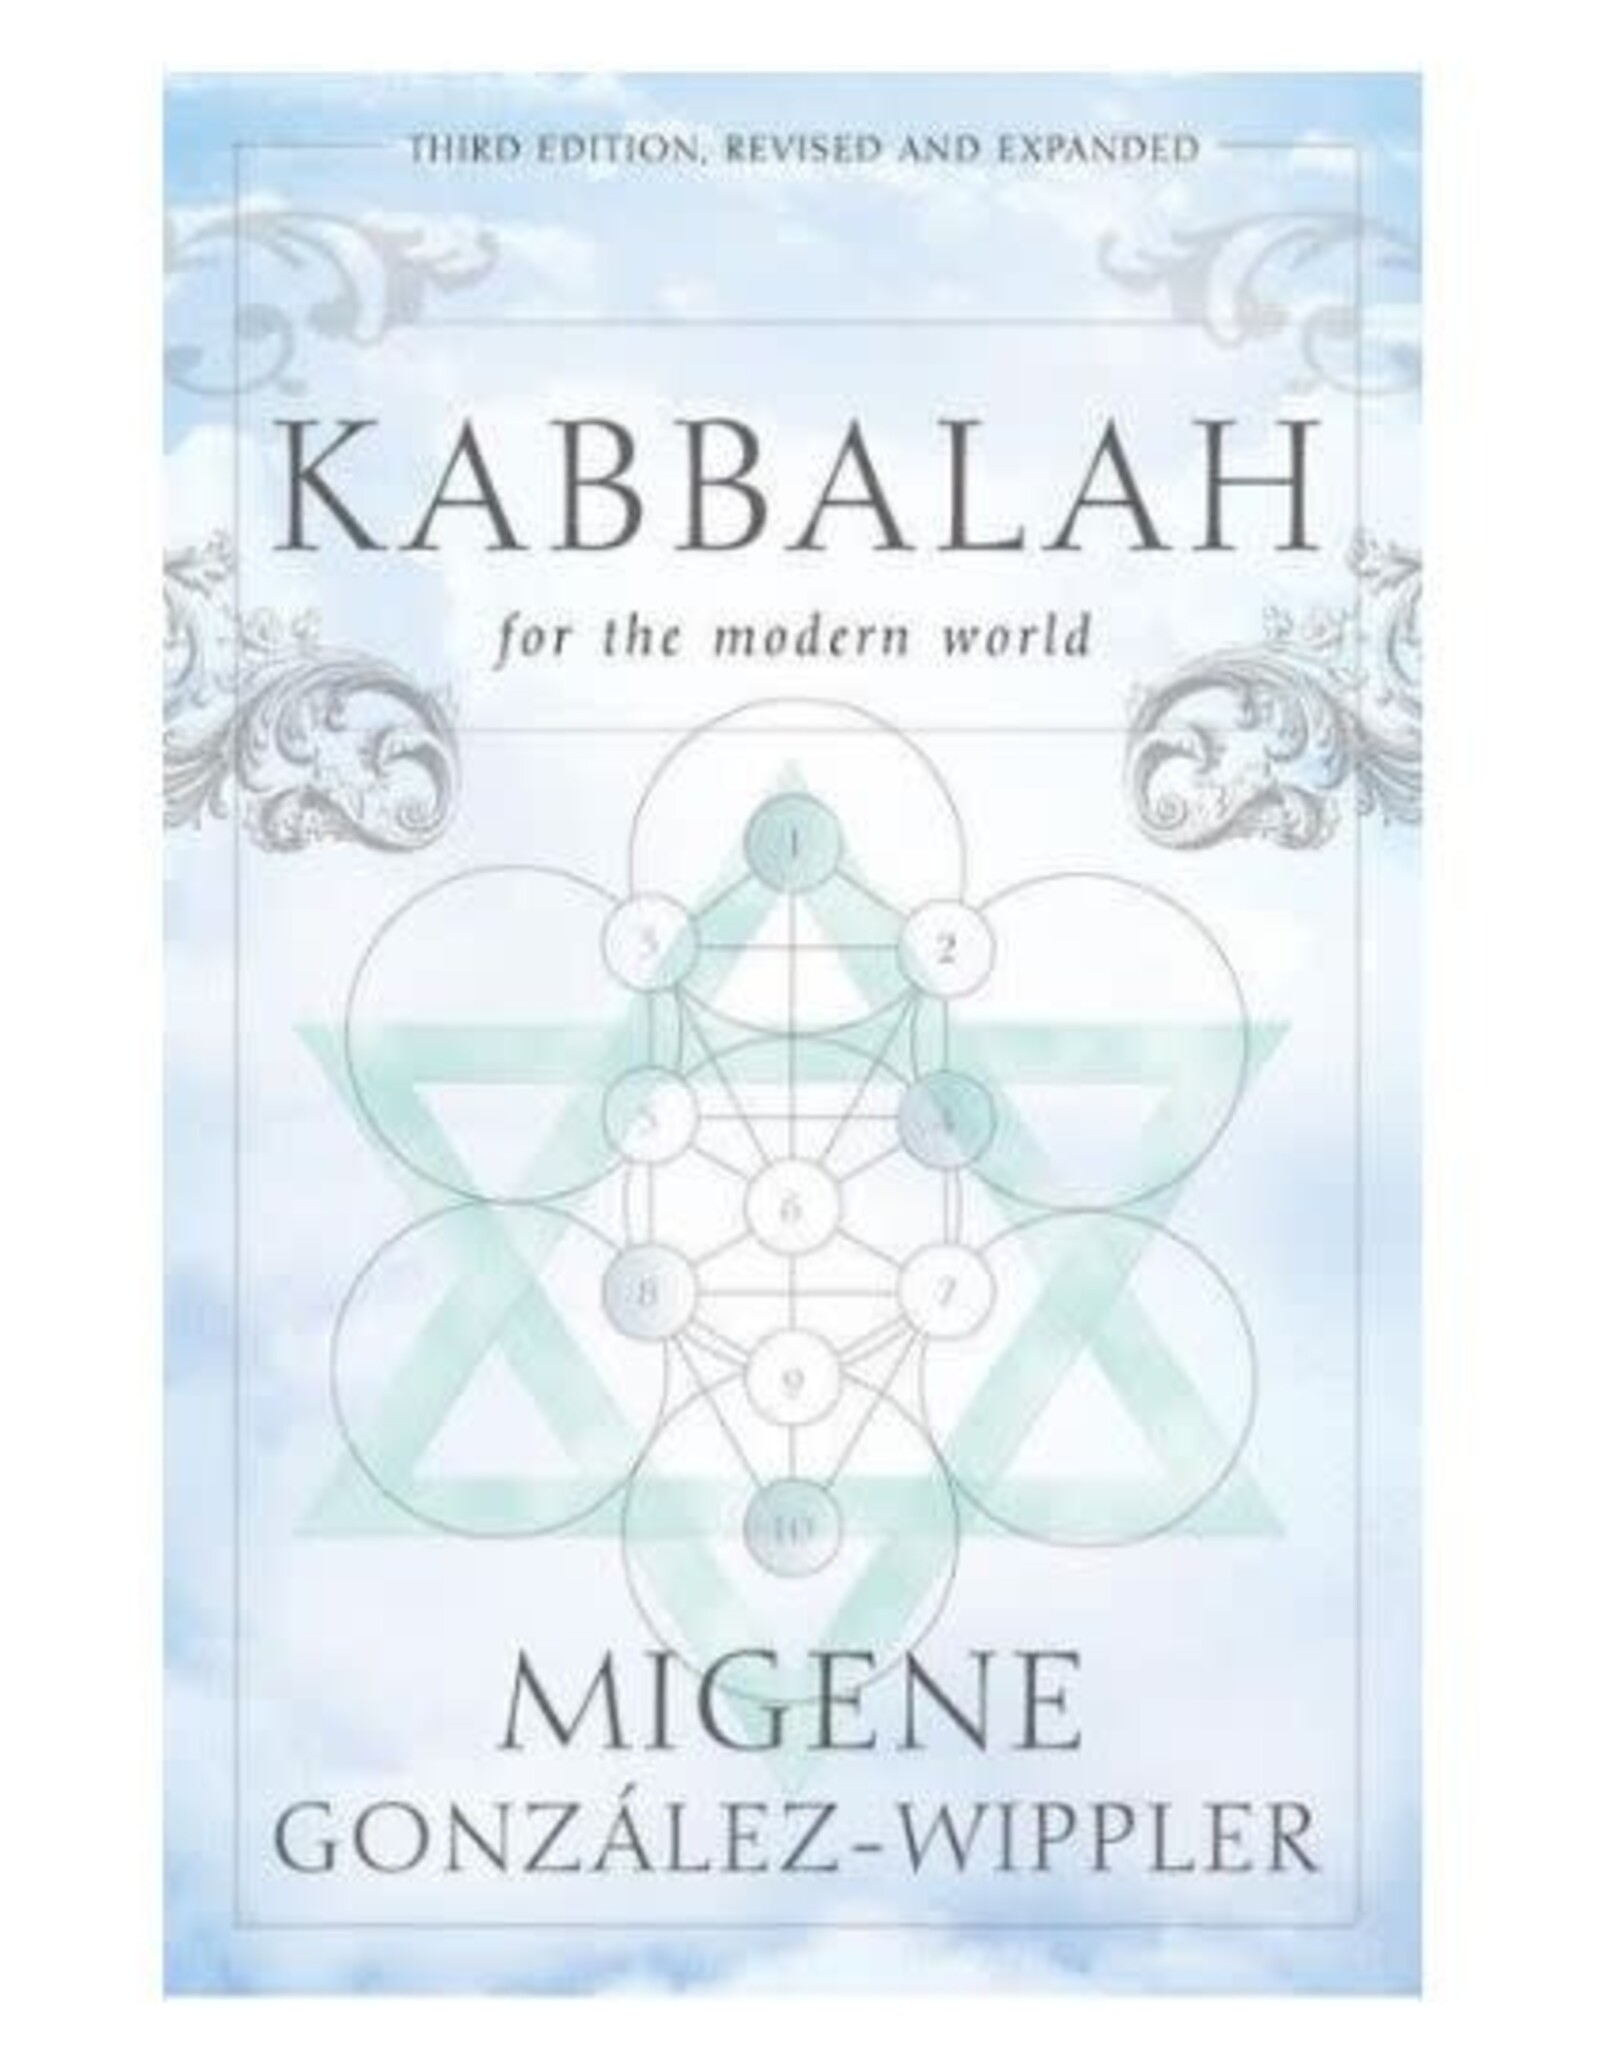 Kabbalah for the Modern World by Migene Gonzalez- Wippler